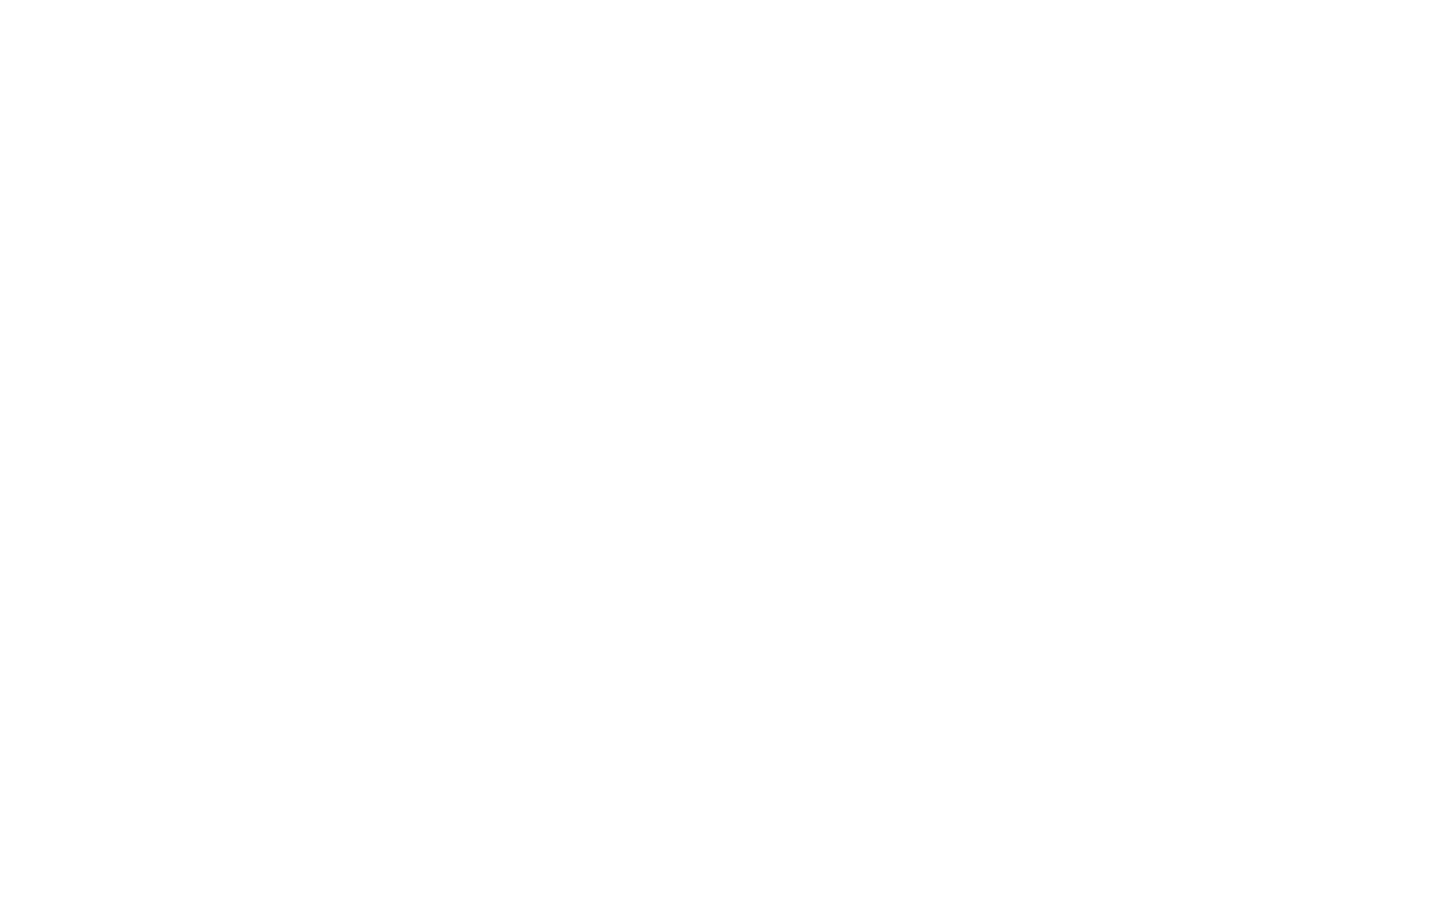 Portworx and Rancher